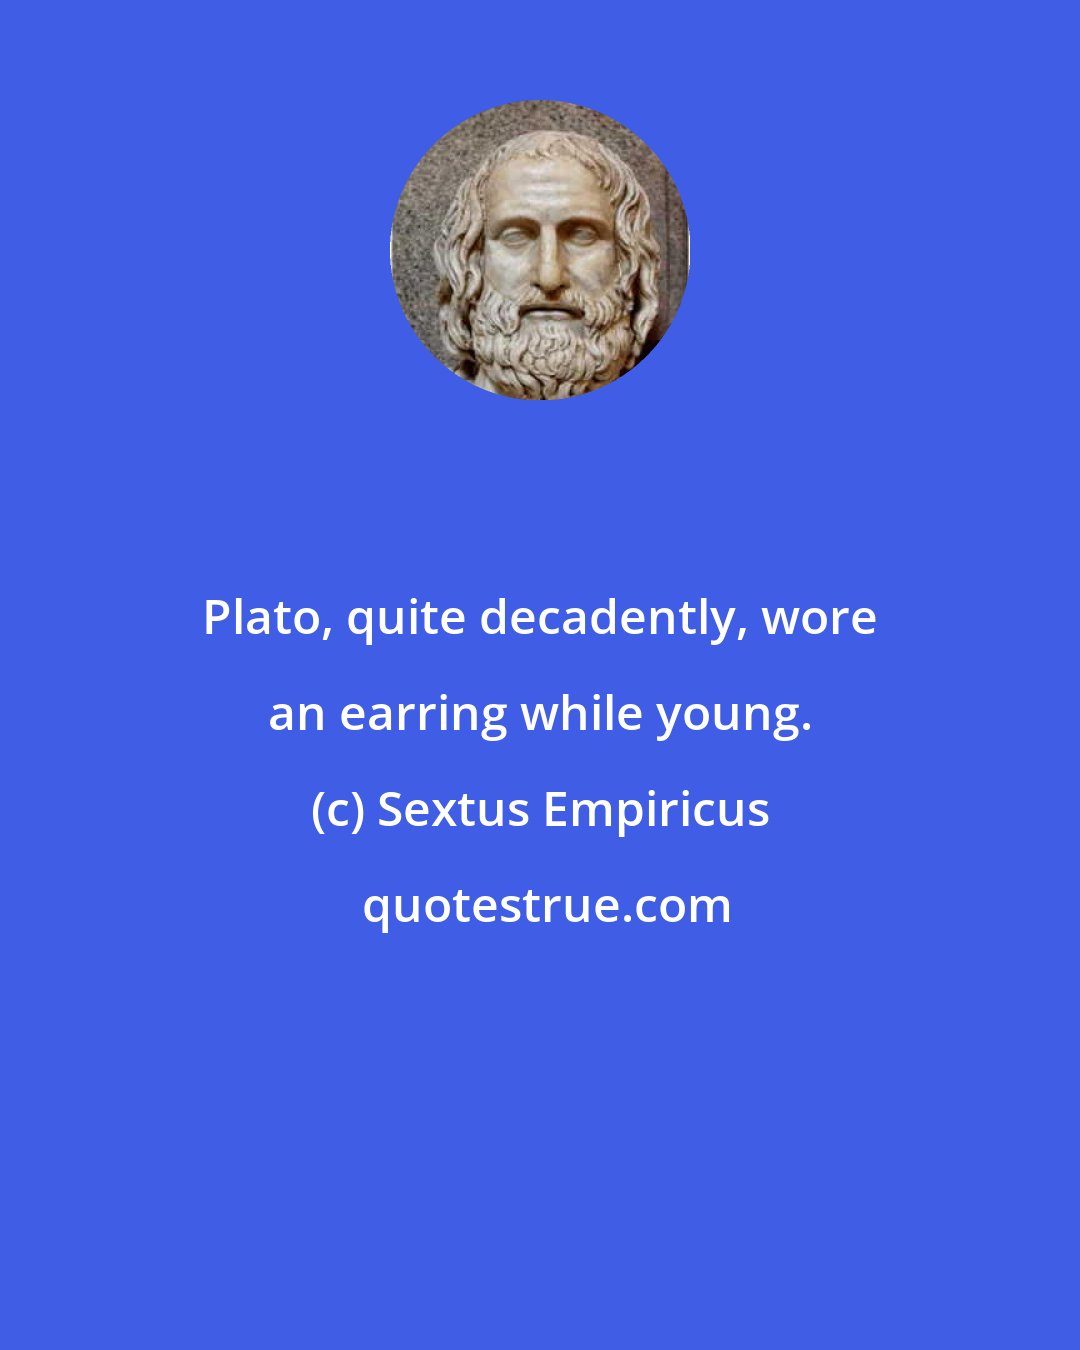 Sextus Empiricus: Plato, quite decadently, wore an earring while young.